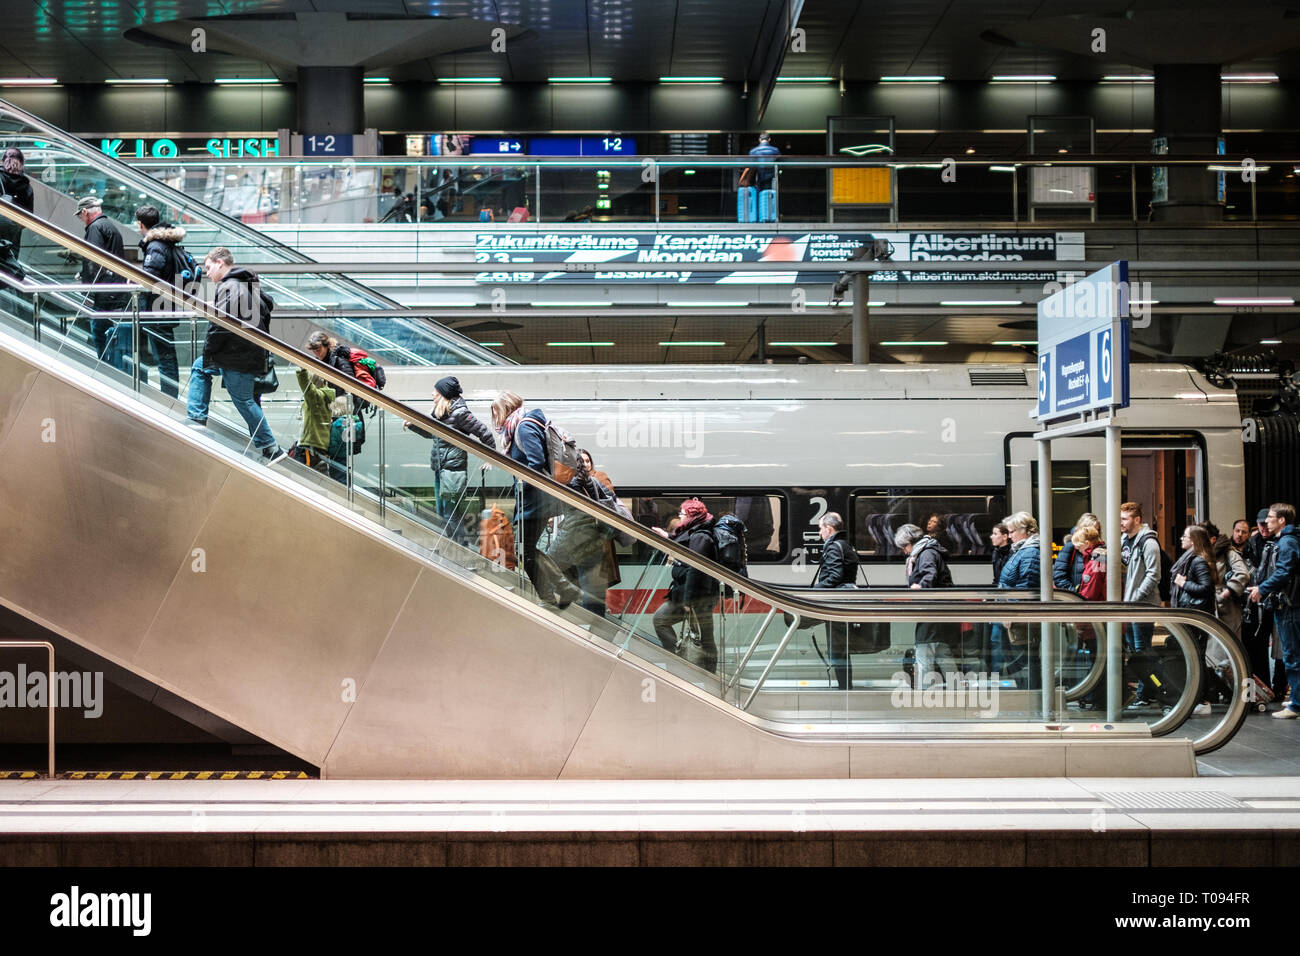 Berlin, Germany - march 2019: People with luggage on escalator inside main train station (Hauptbahnhof) in Berlin, Germany Stock Photo